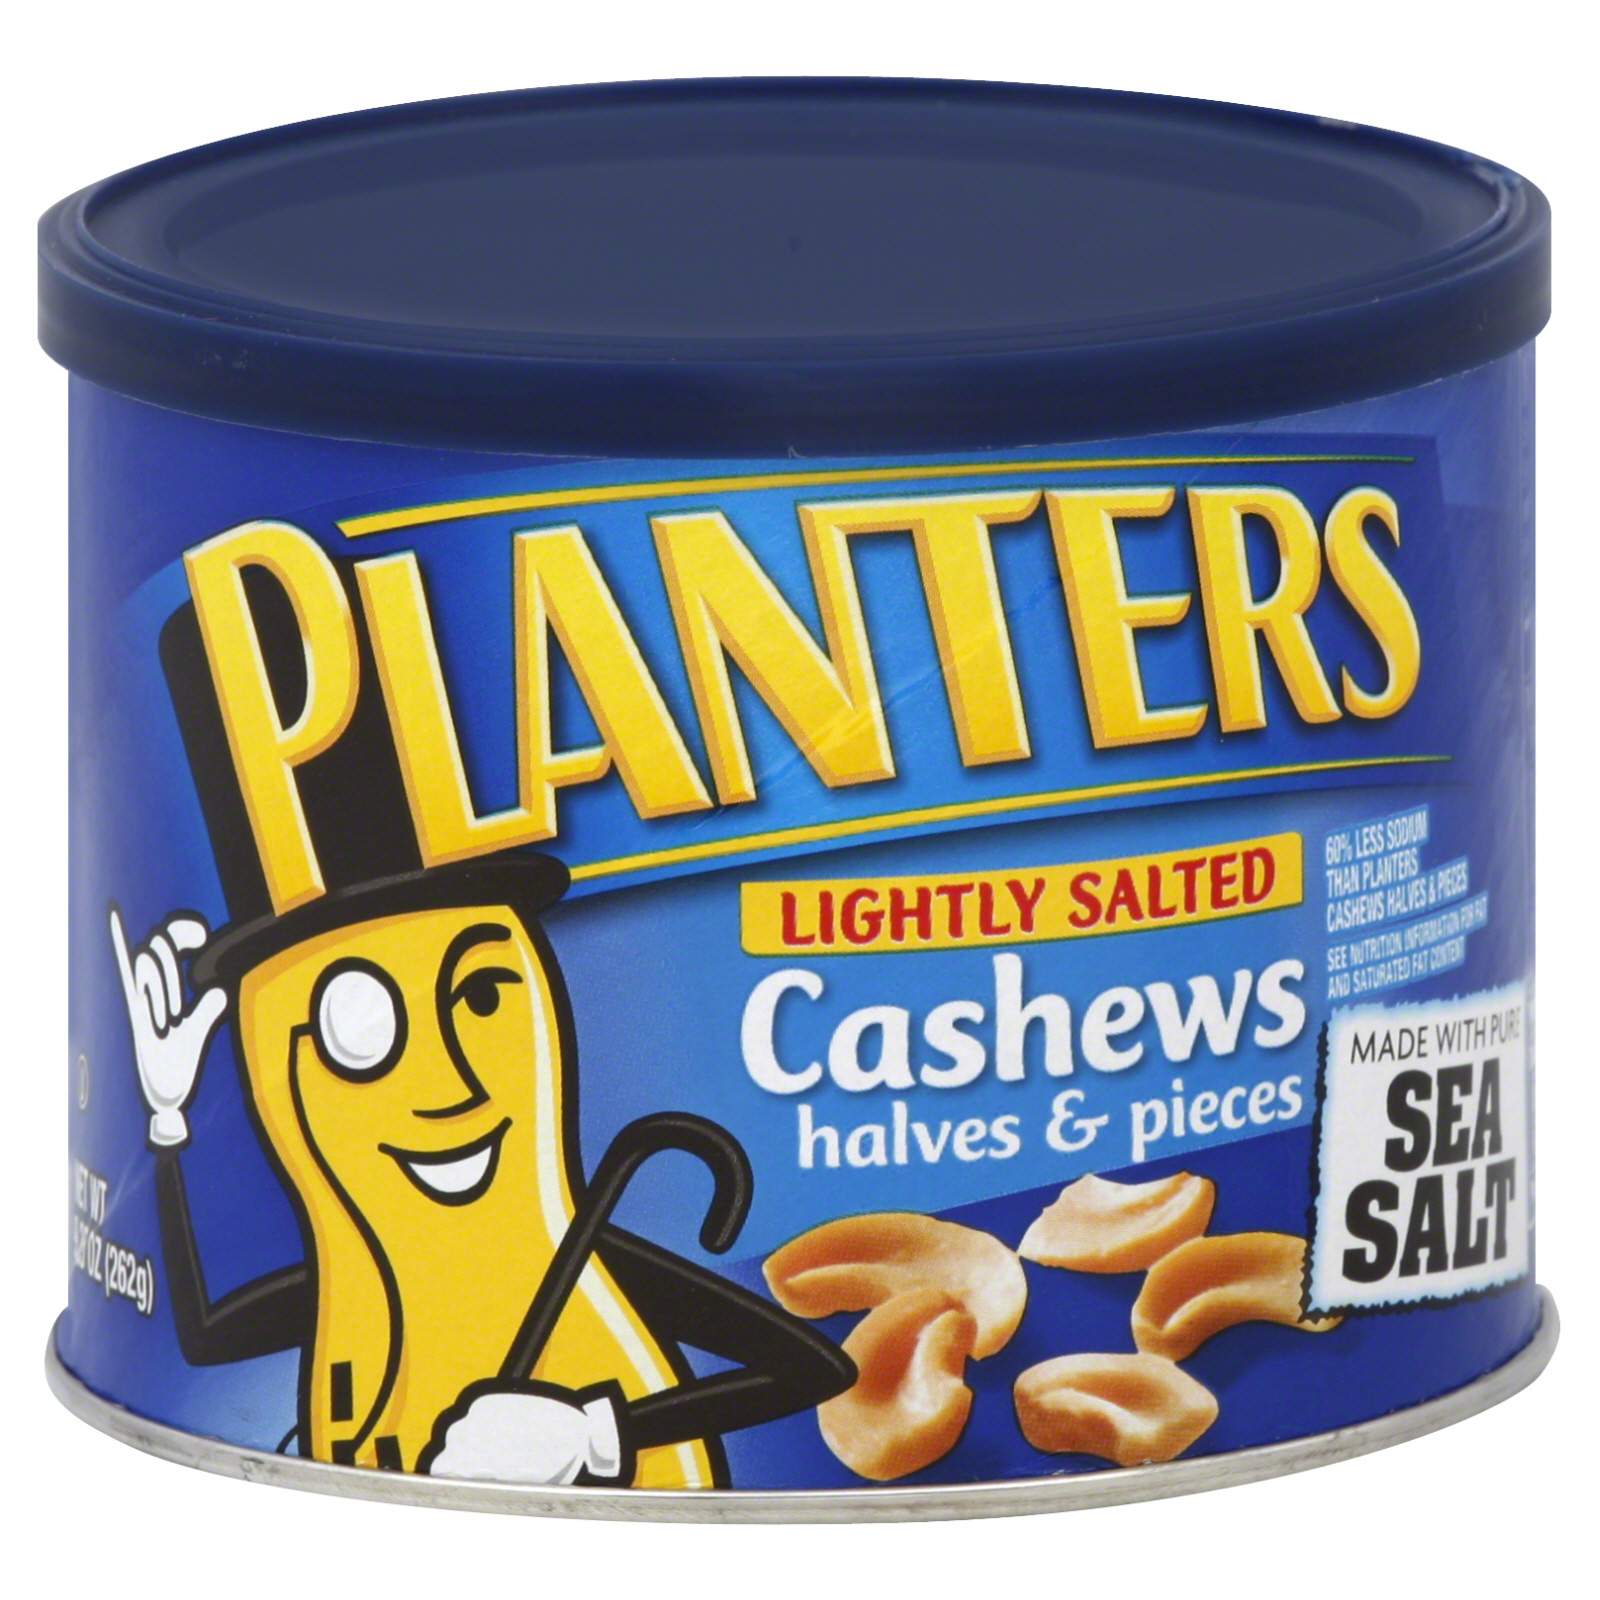 Planters Cashews, Halves & Pieces, Lightly Salted, 9.25 oz (262 g)